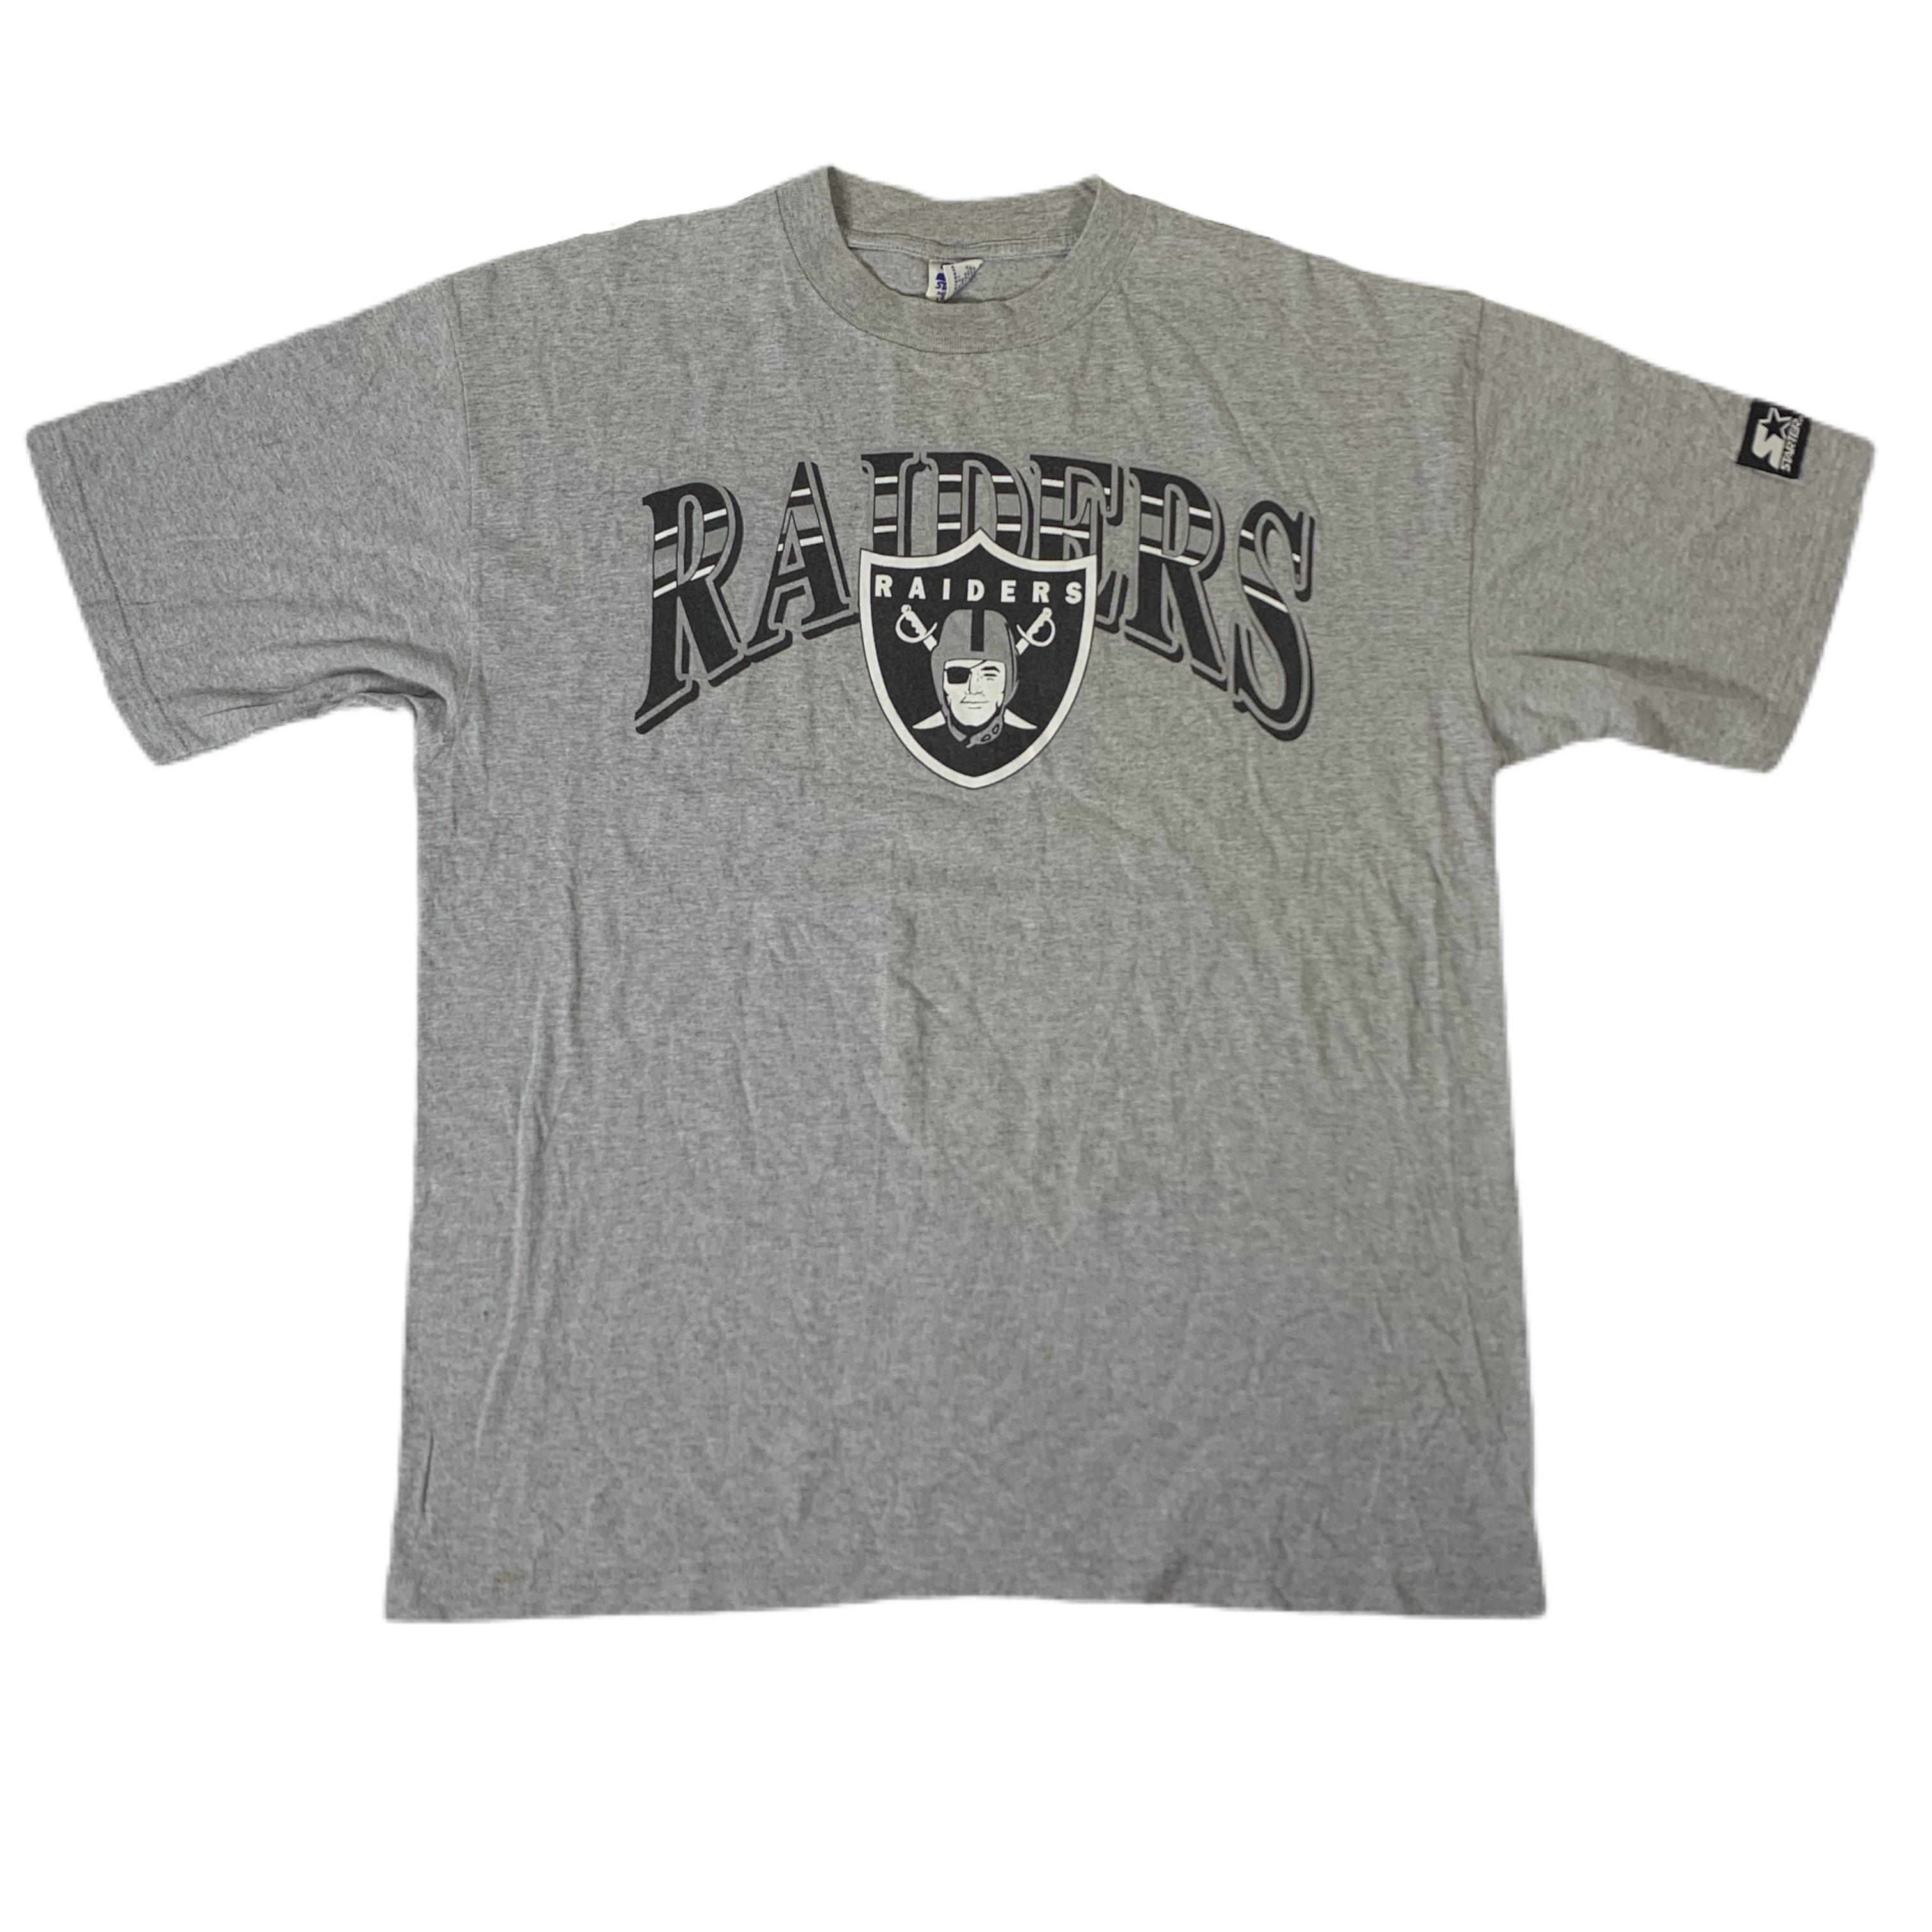 Vintage Original 1980s NFL Los Angeles Raiders T-shirt. 